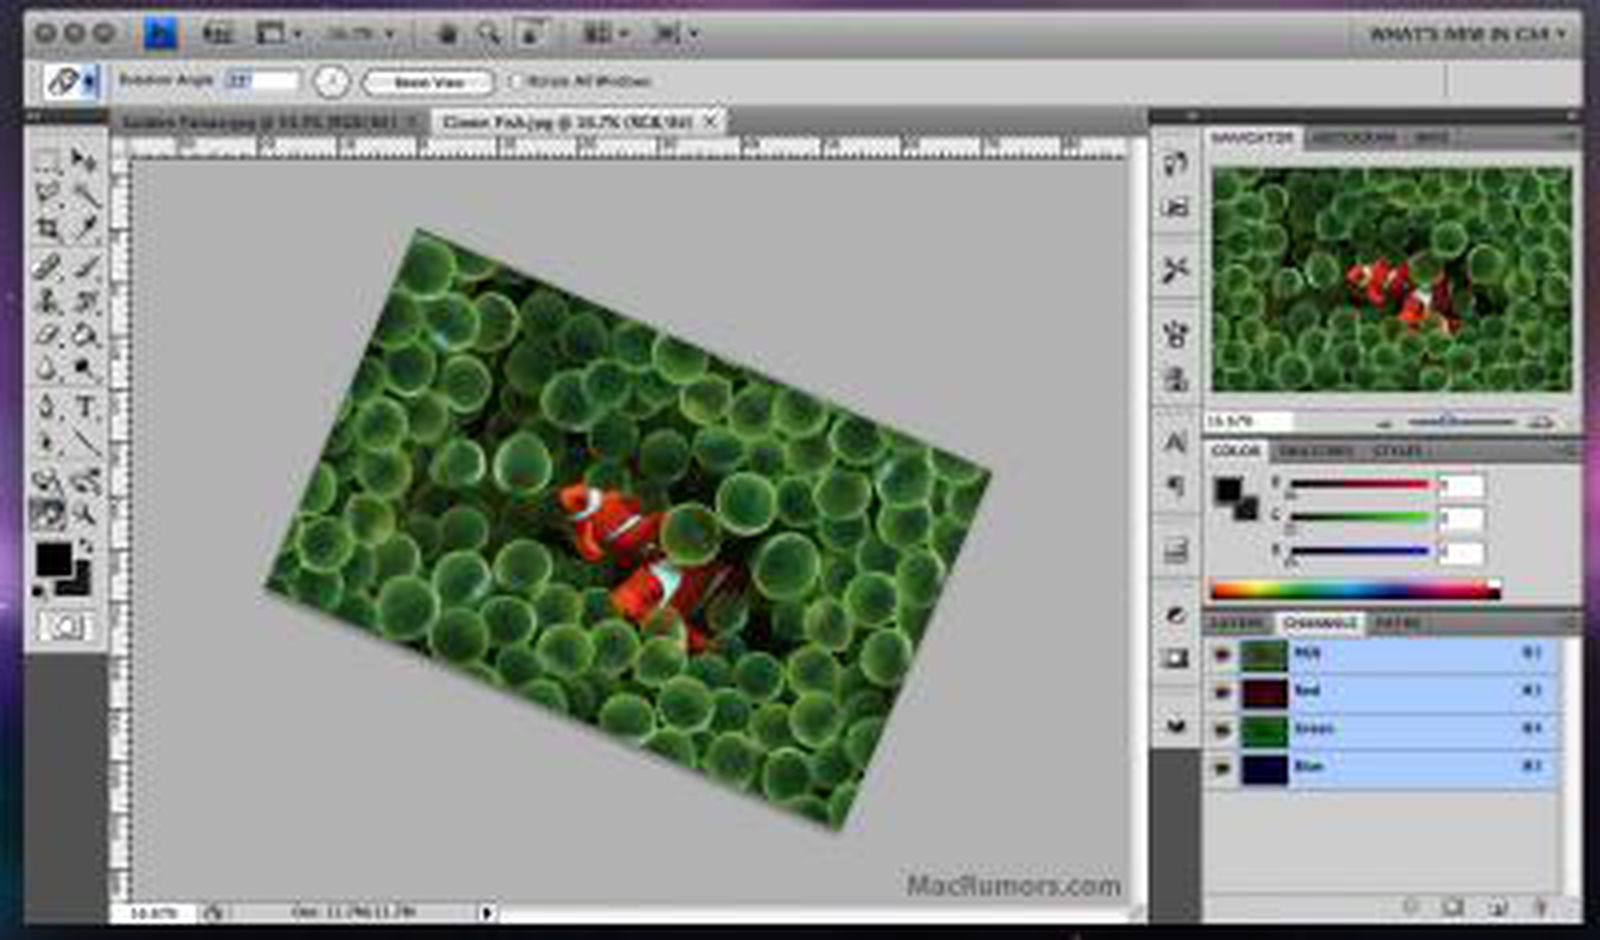 Cara Install dan Aktivasi Adobe Photoshop CS4 (100% Gratis)